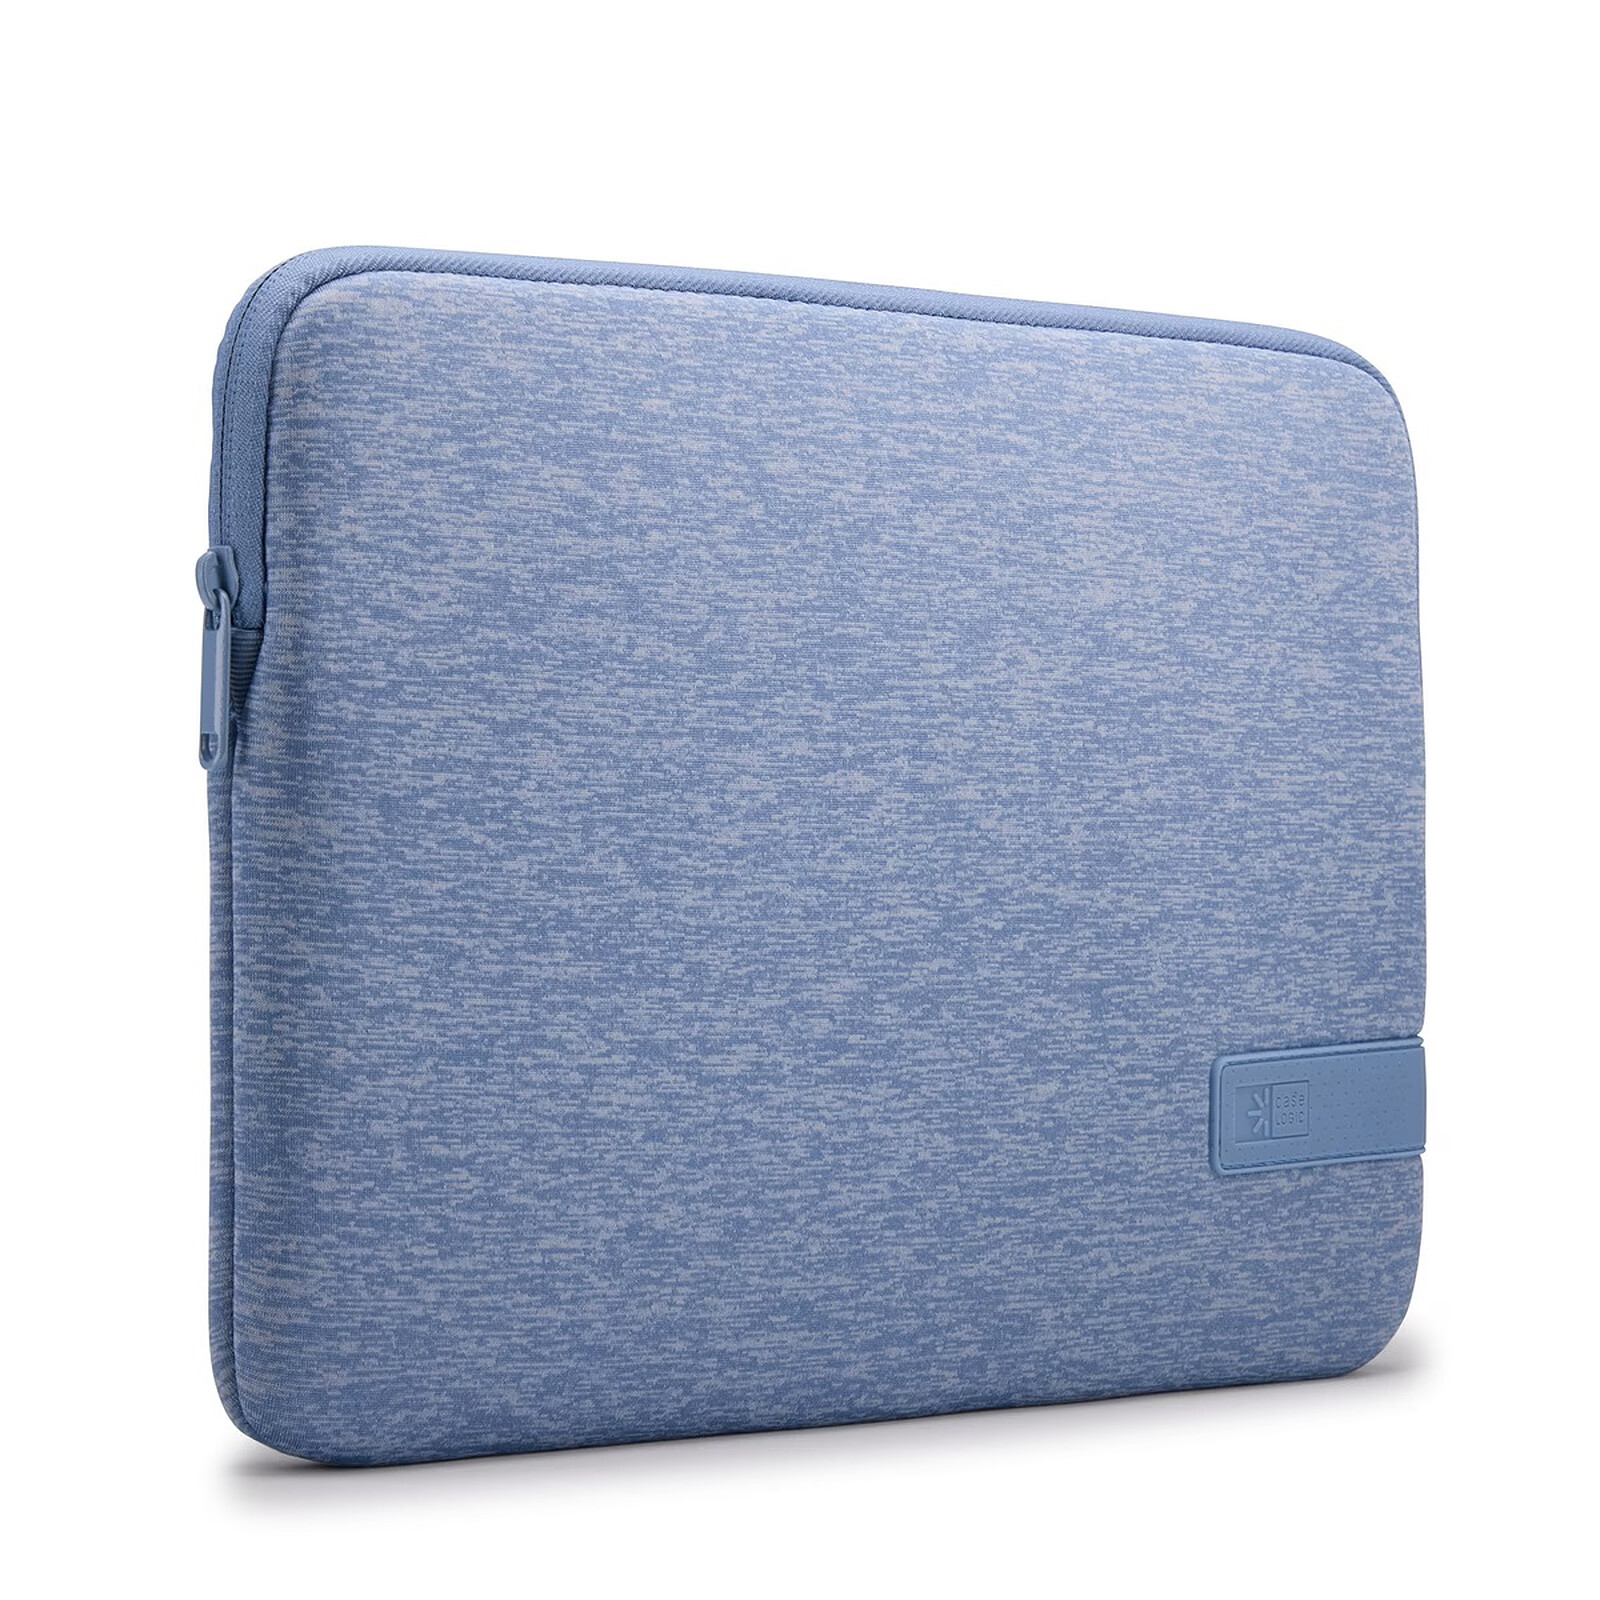 Case Logic Reflect MacBook Pro Sleeve 13 (Skywell Blue) - Sac